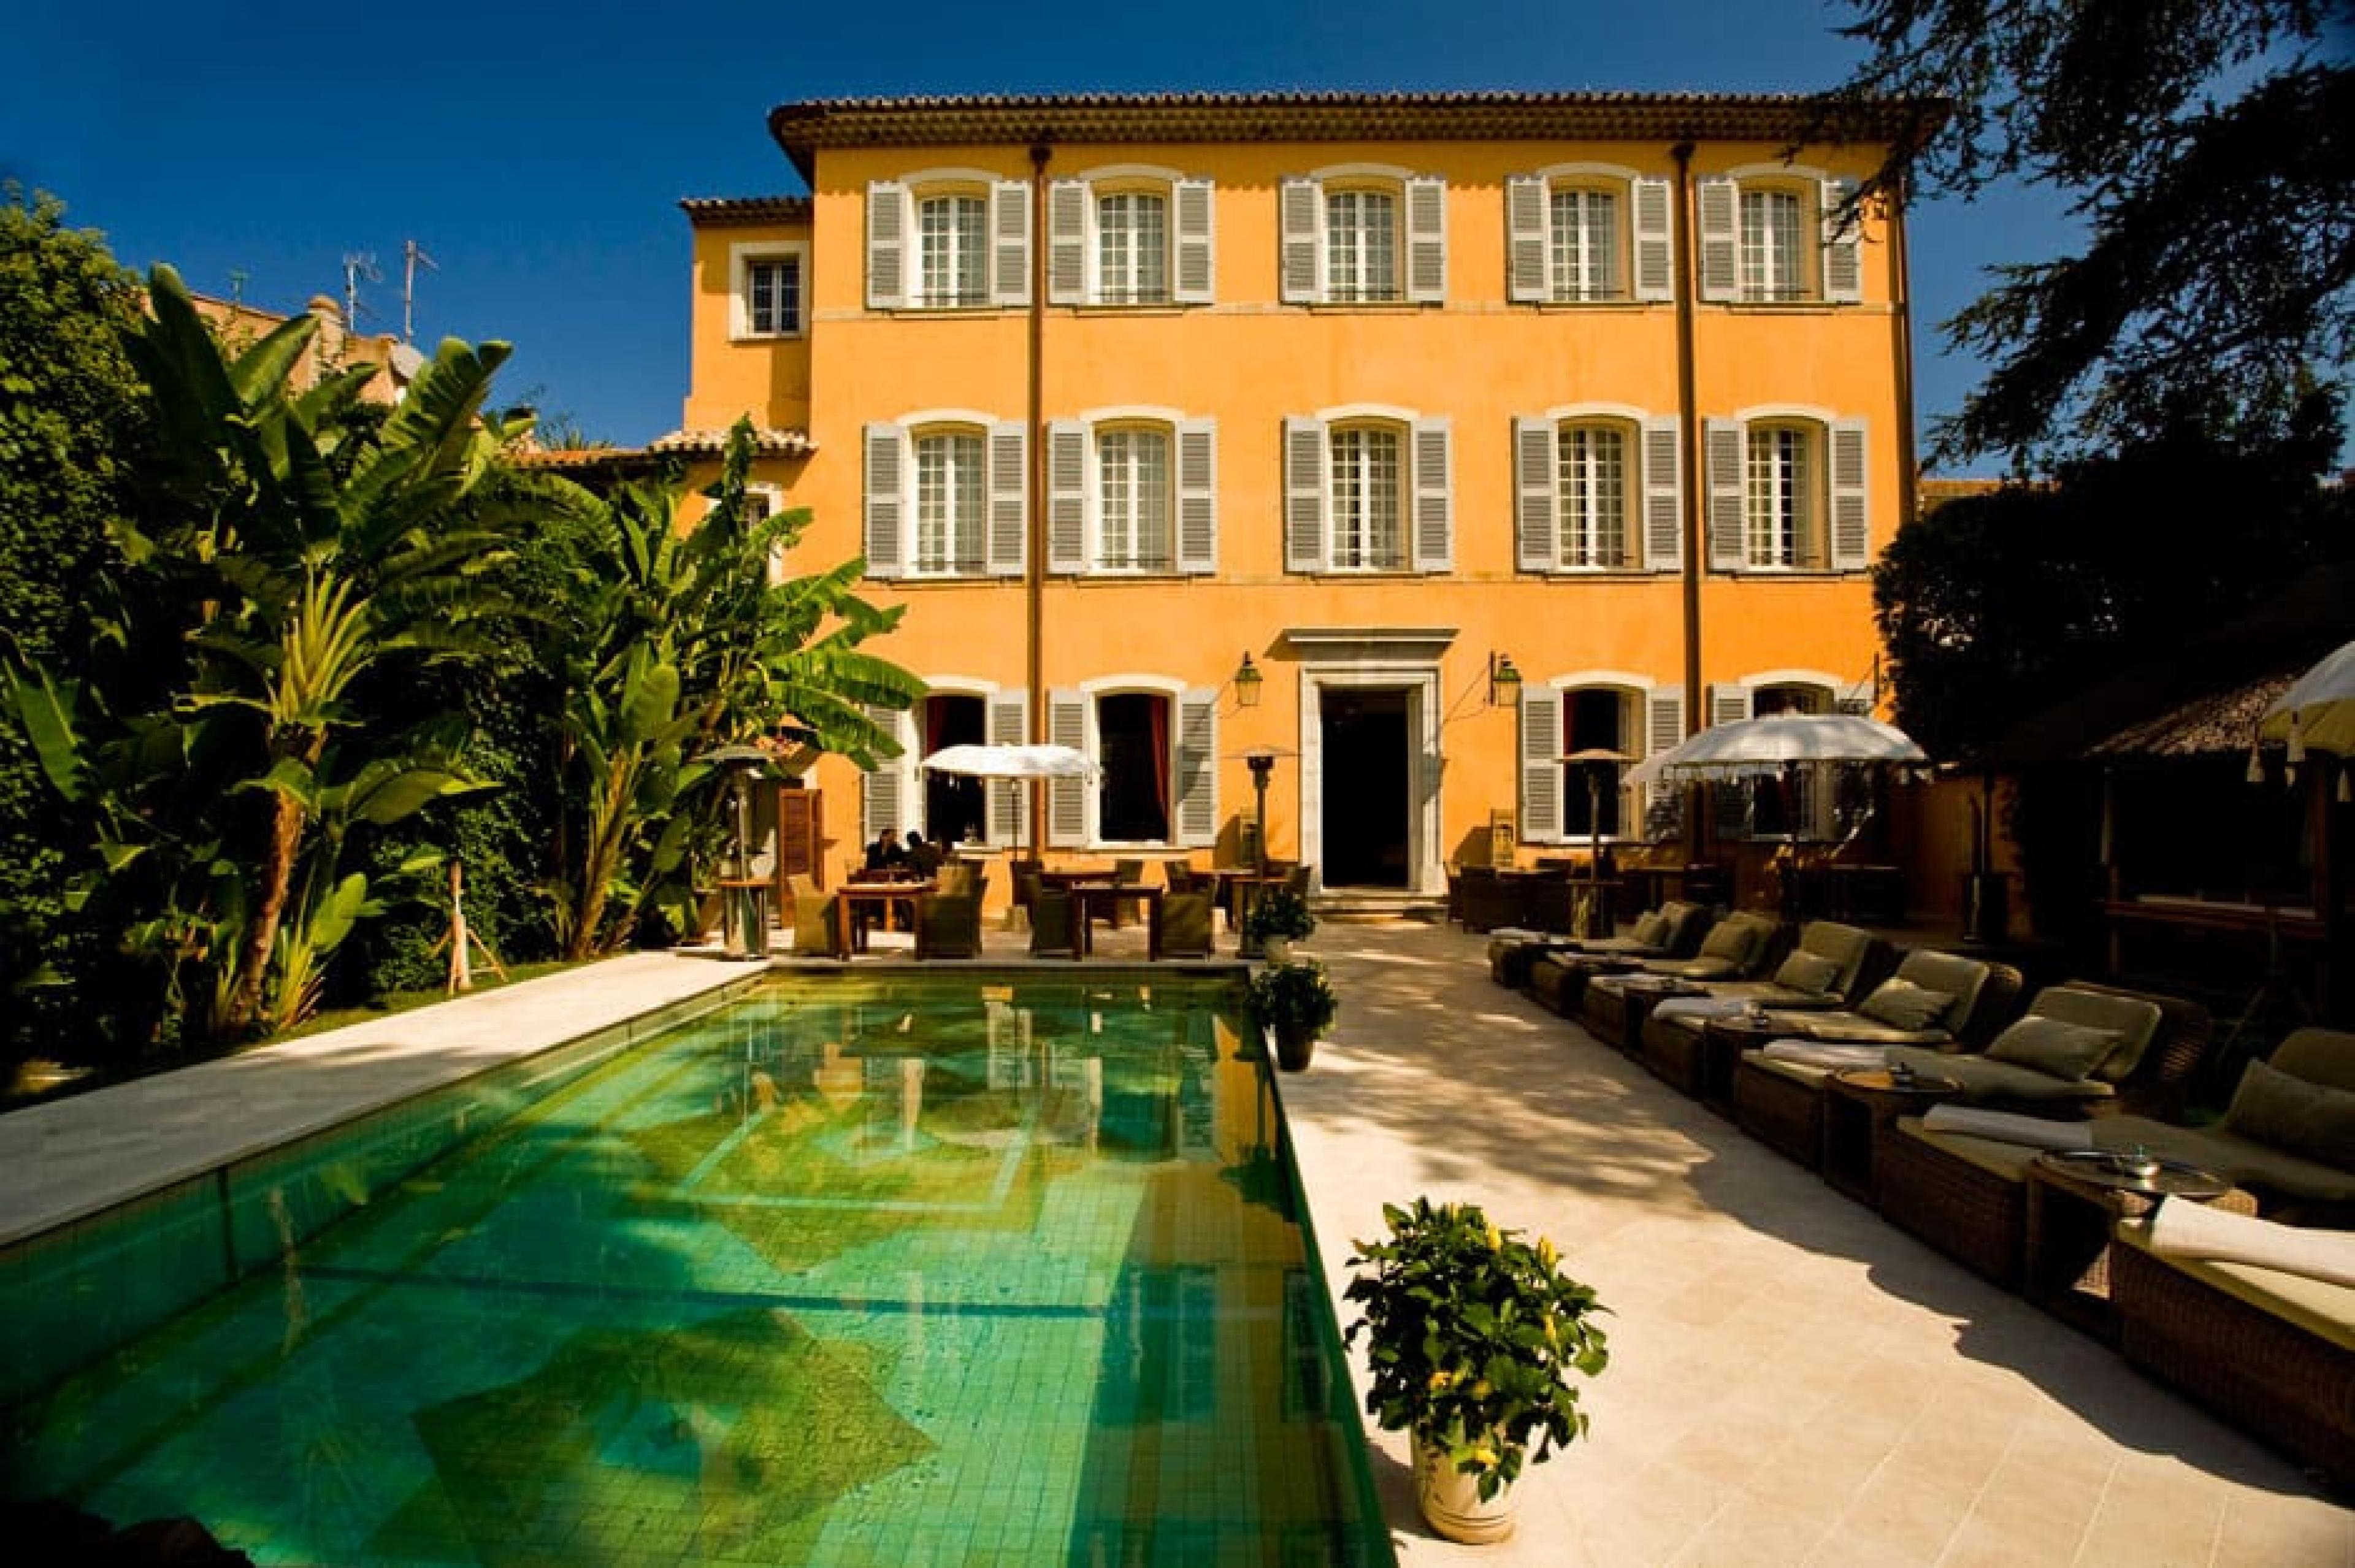 Pool Lounge at Pan Deï Palais, St. Tropez, France - Photo Courtsey : Peter Brown